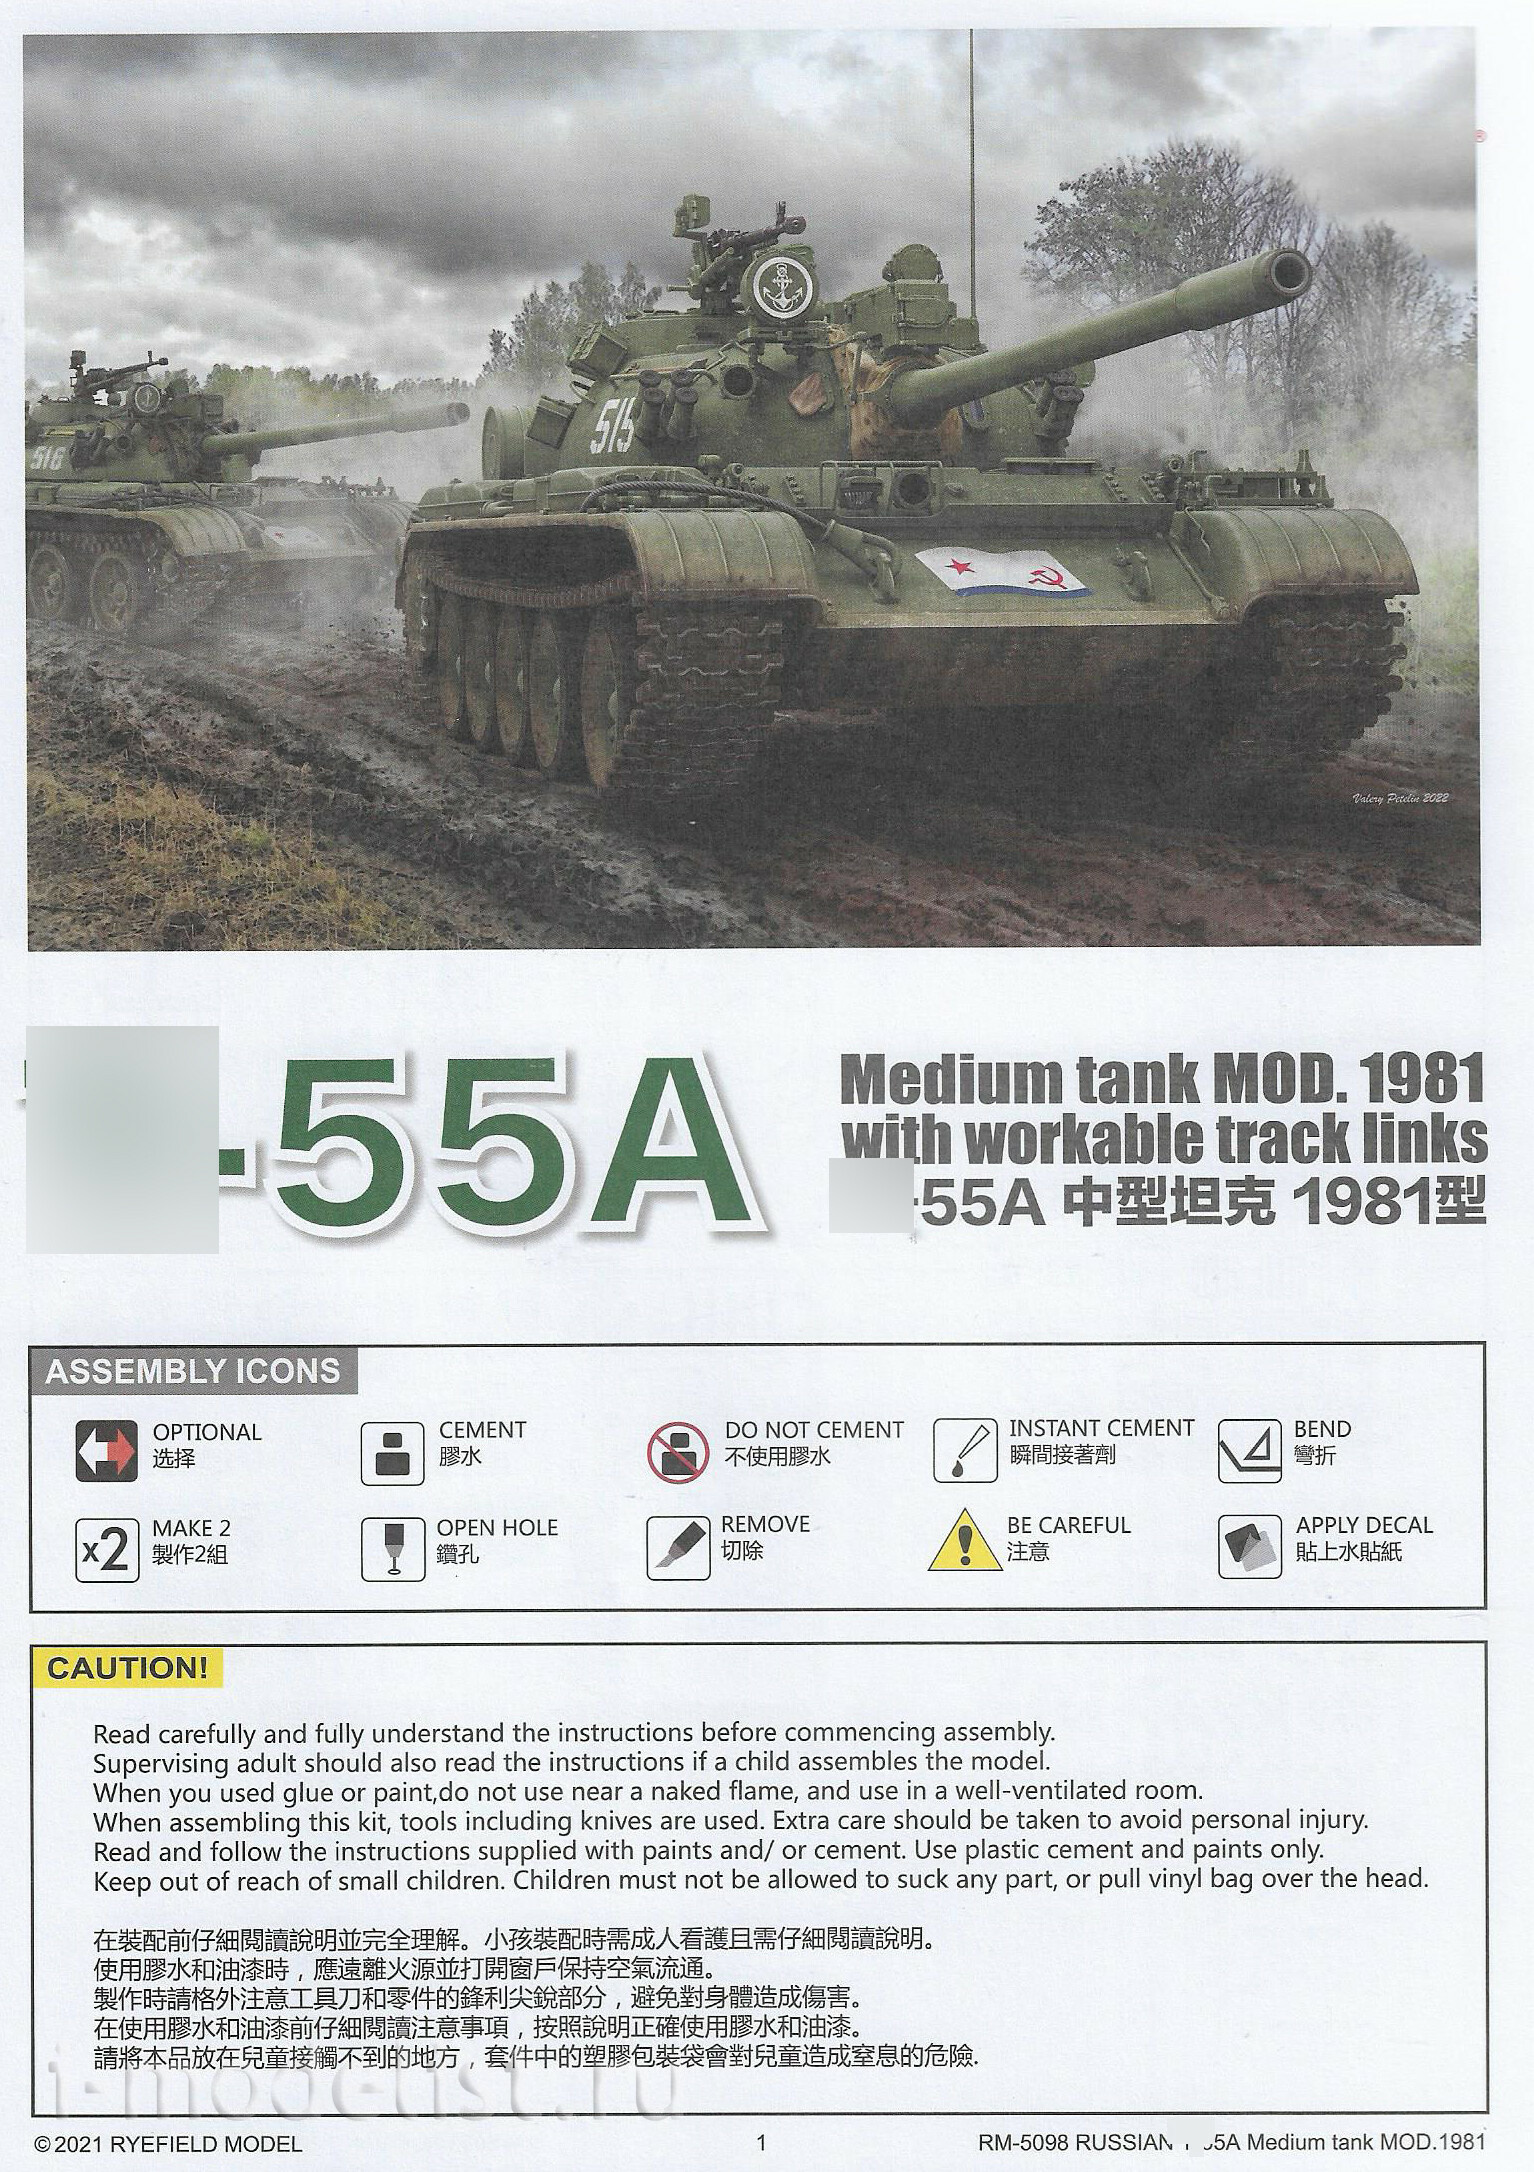 RM-5098 Rye Field Model 1/35 Советский средний танк тип-55А мод. 1981